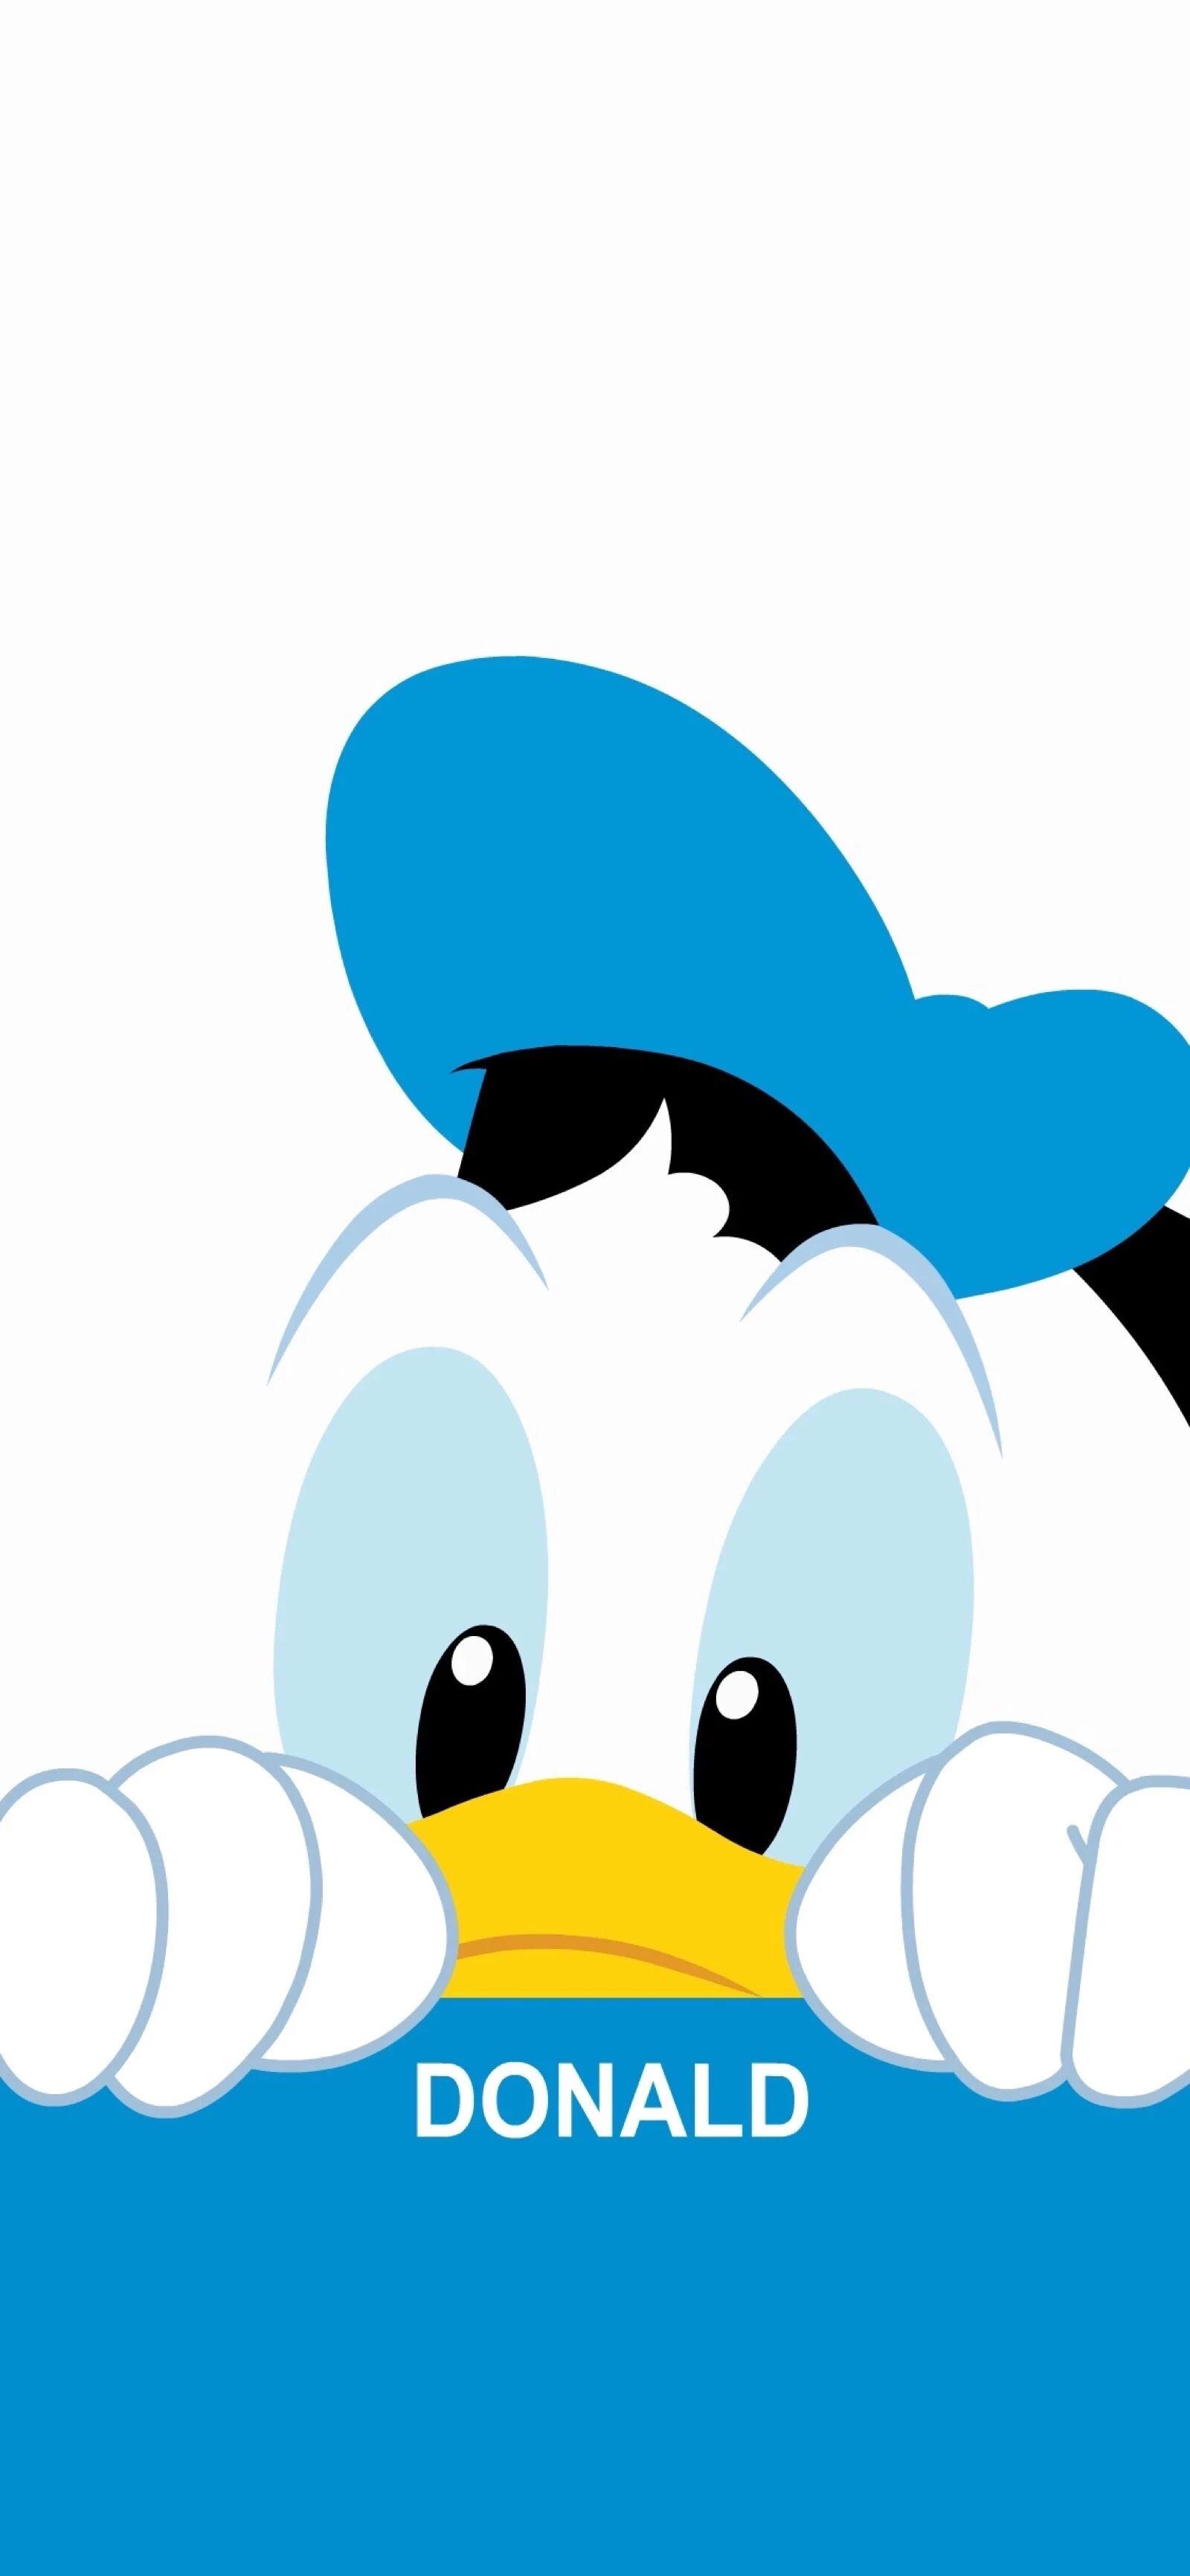 Disney Donald's Duck iPhone Wallpaper. Daisy and donald duck